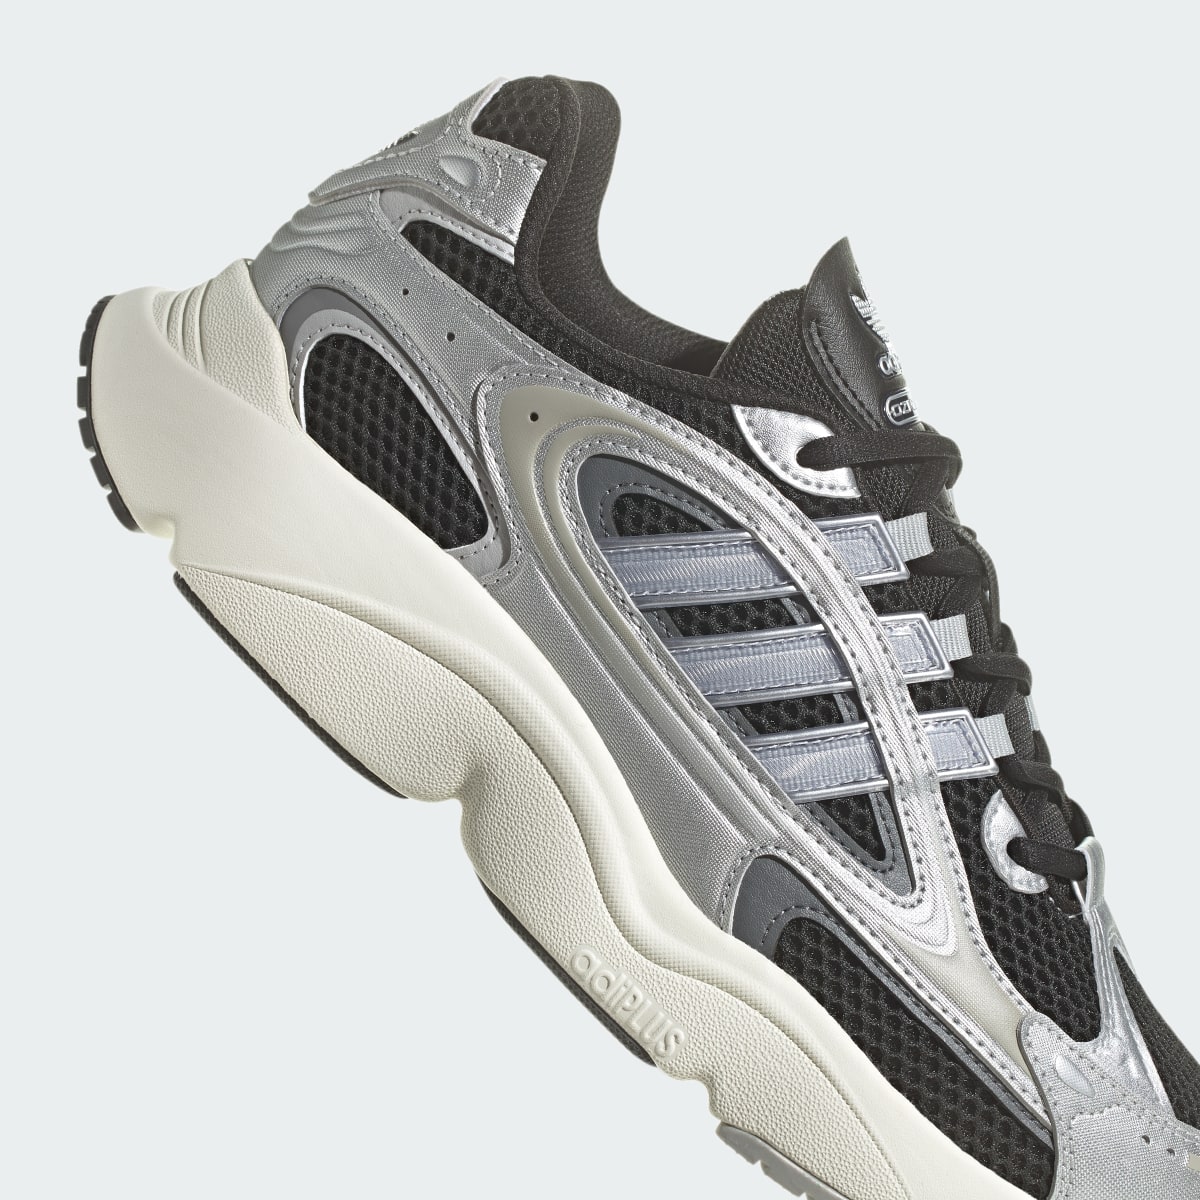 Adidas OZMILLEN Schuh. 9